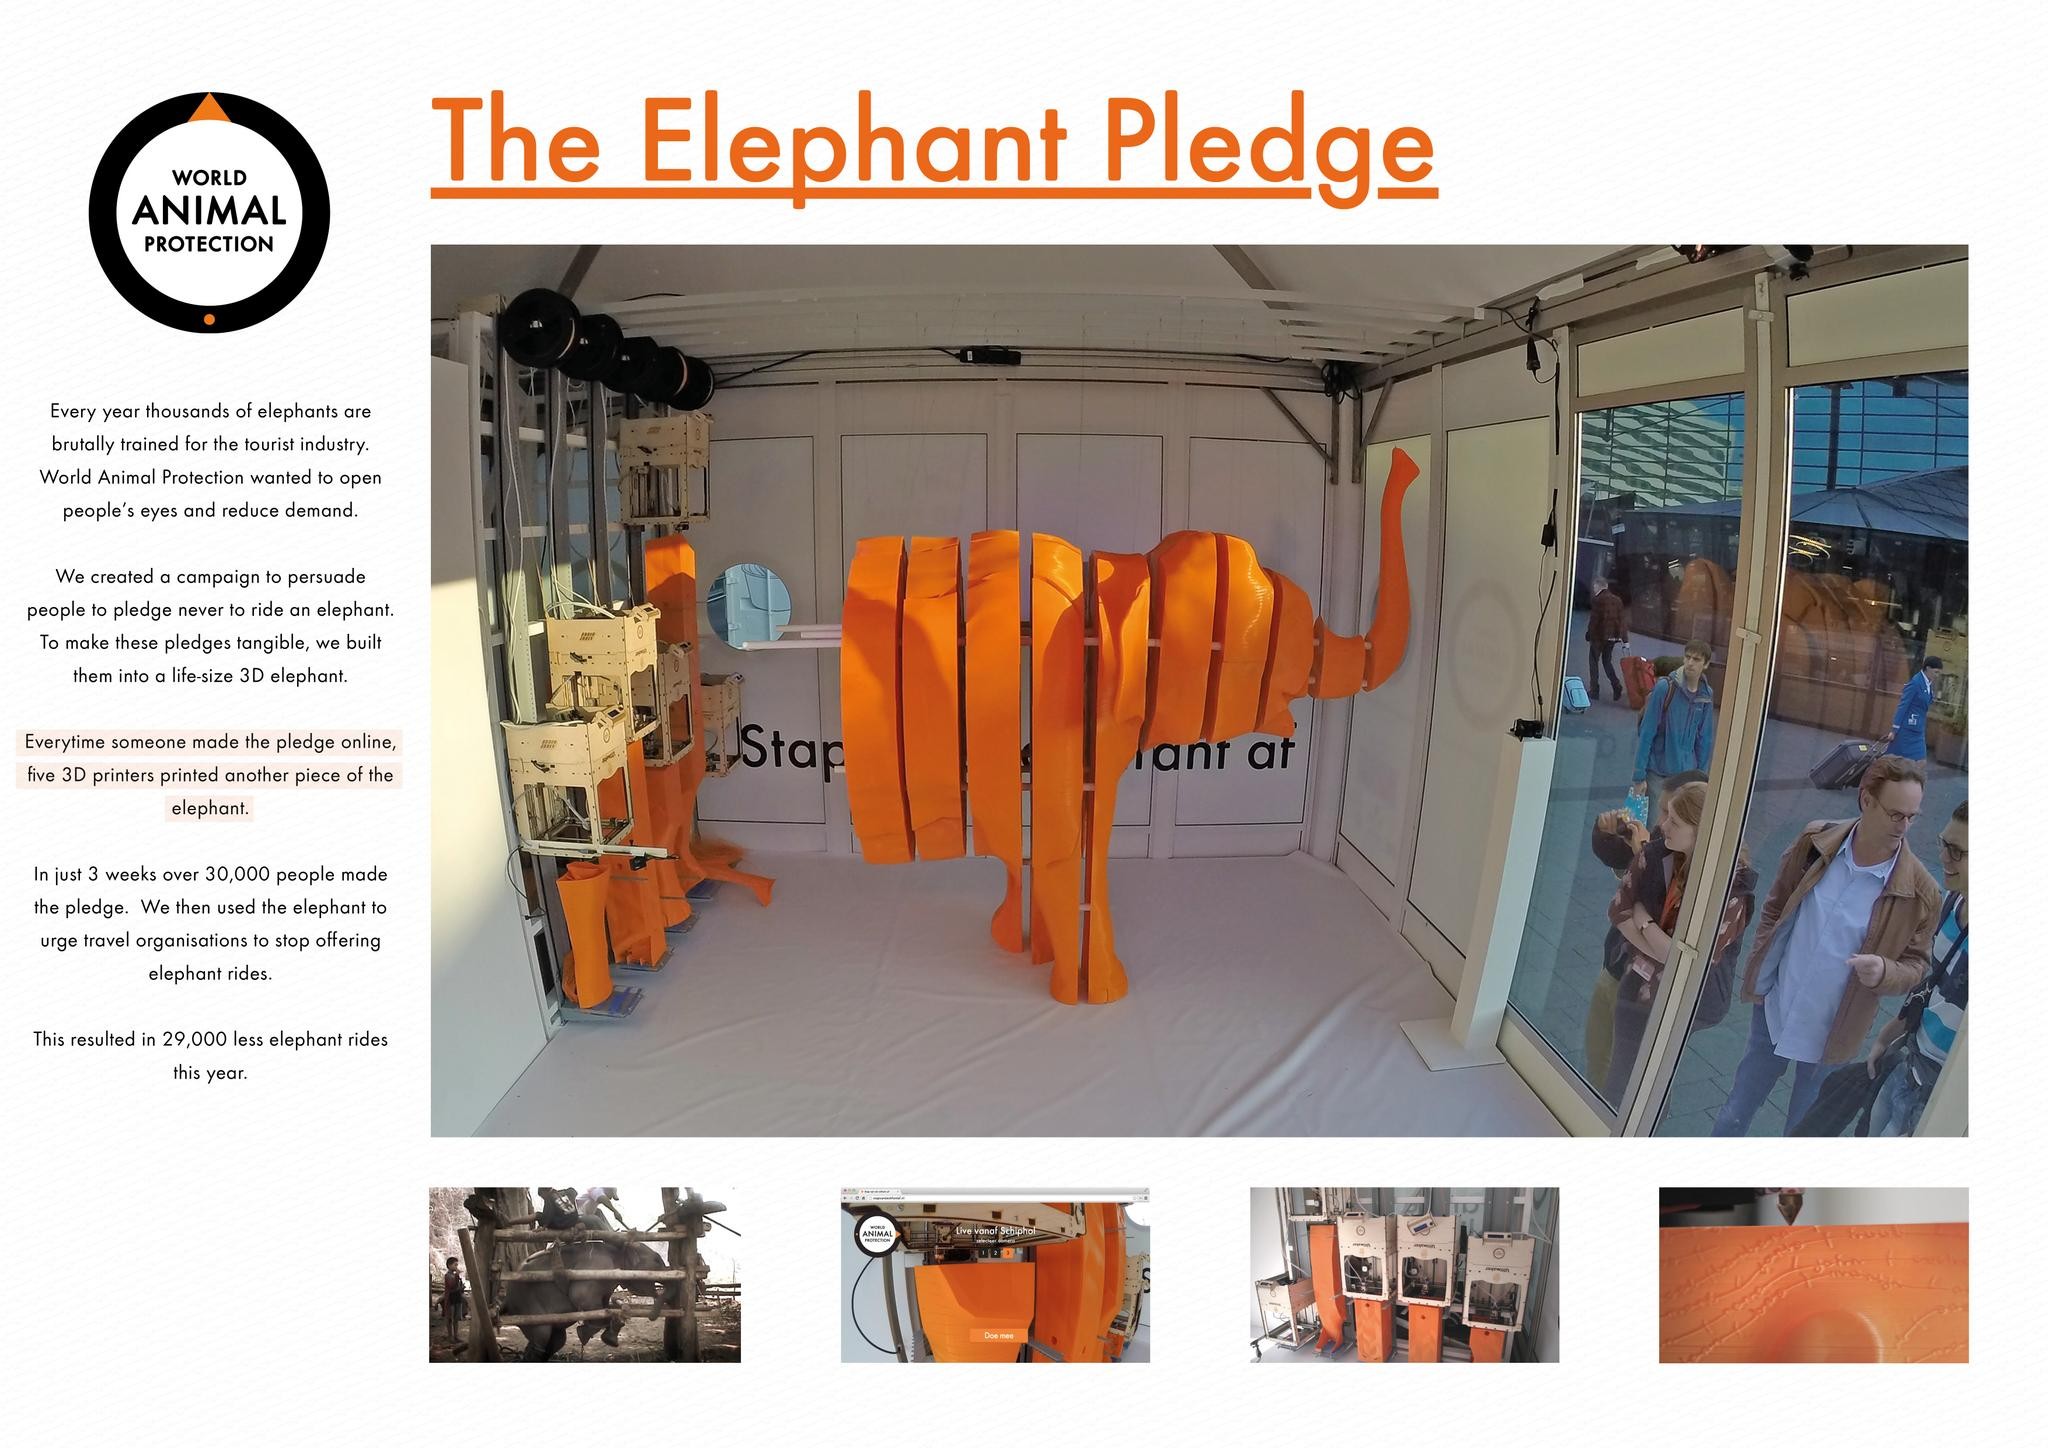 THE 3D ELEPHANT PETITION